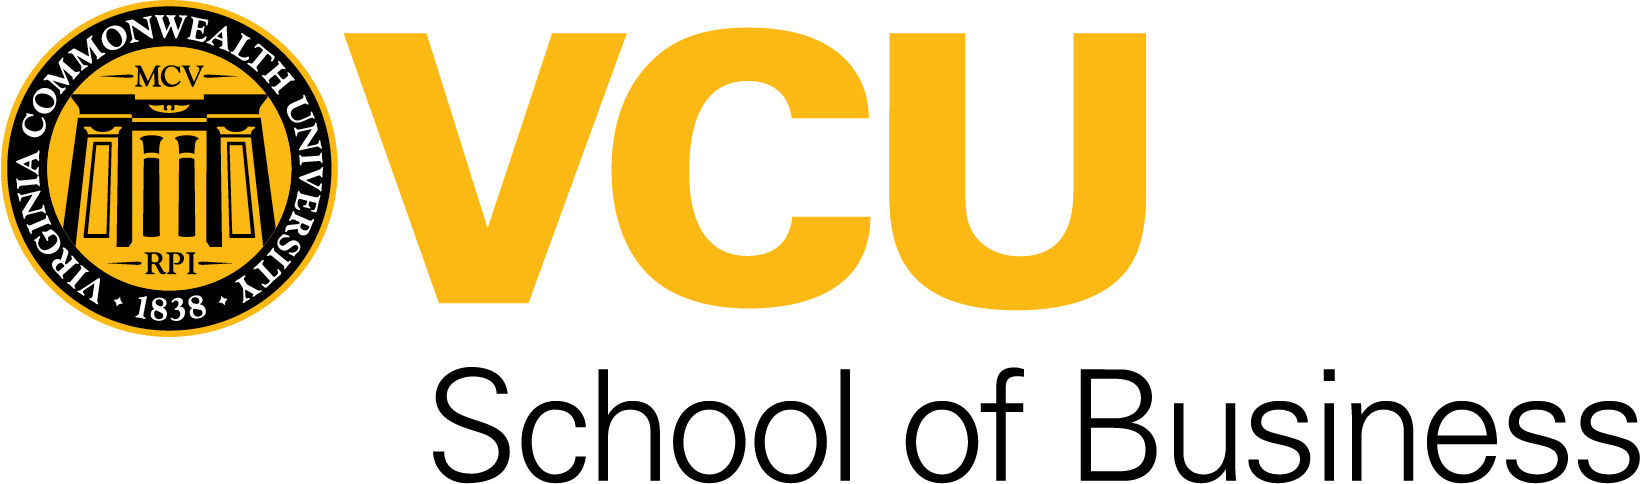 VCU school of business logo